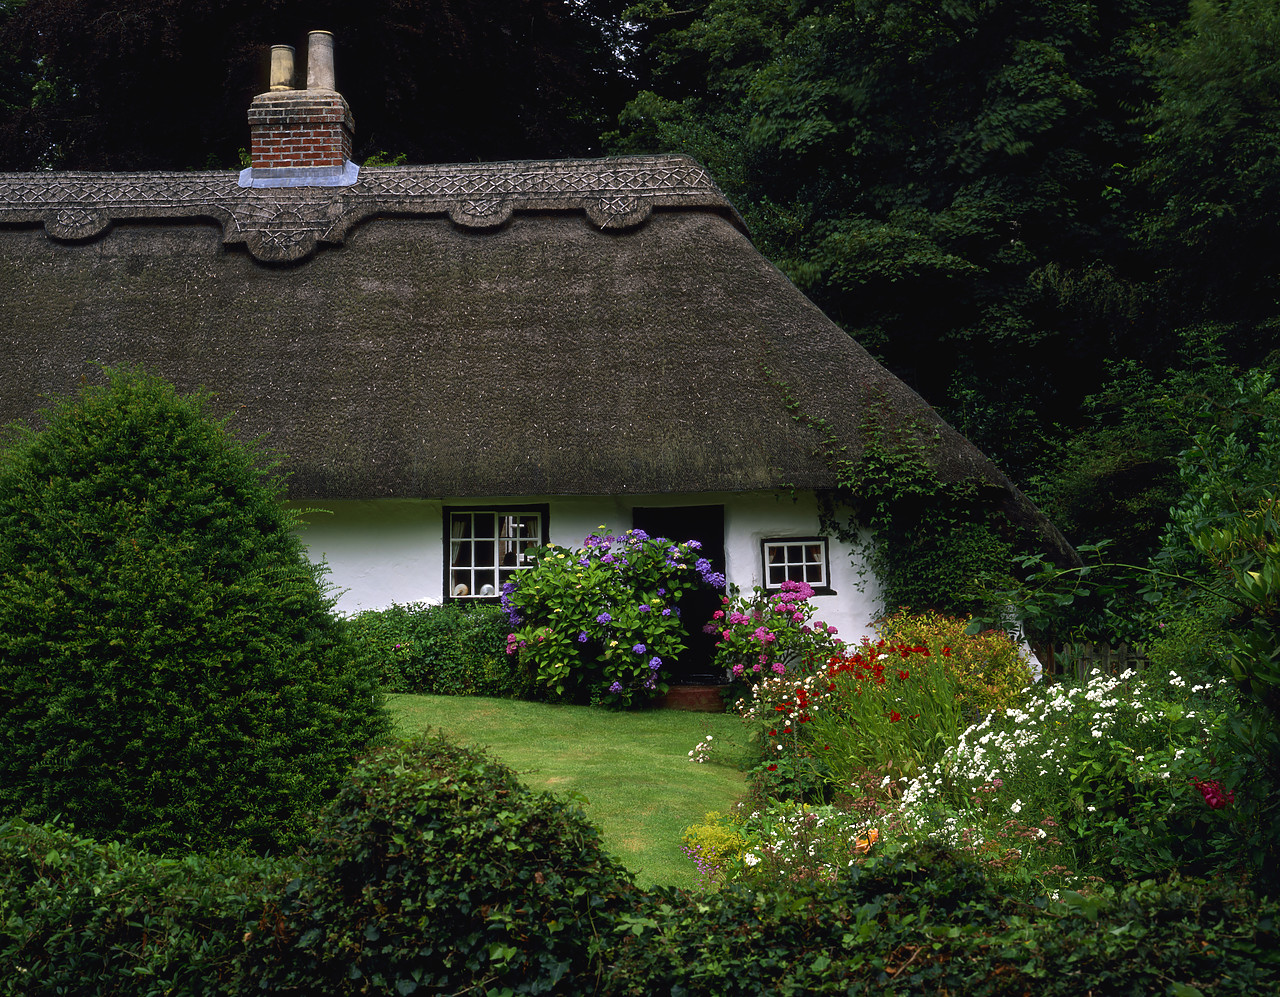 #970185-2 - Thatched Cottage, Harrington, Lincolnshire, England